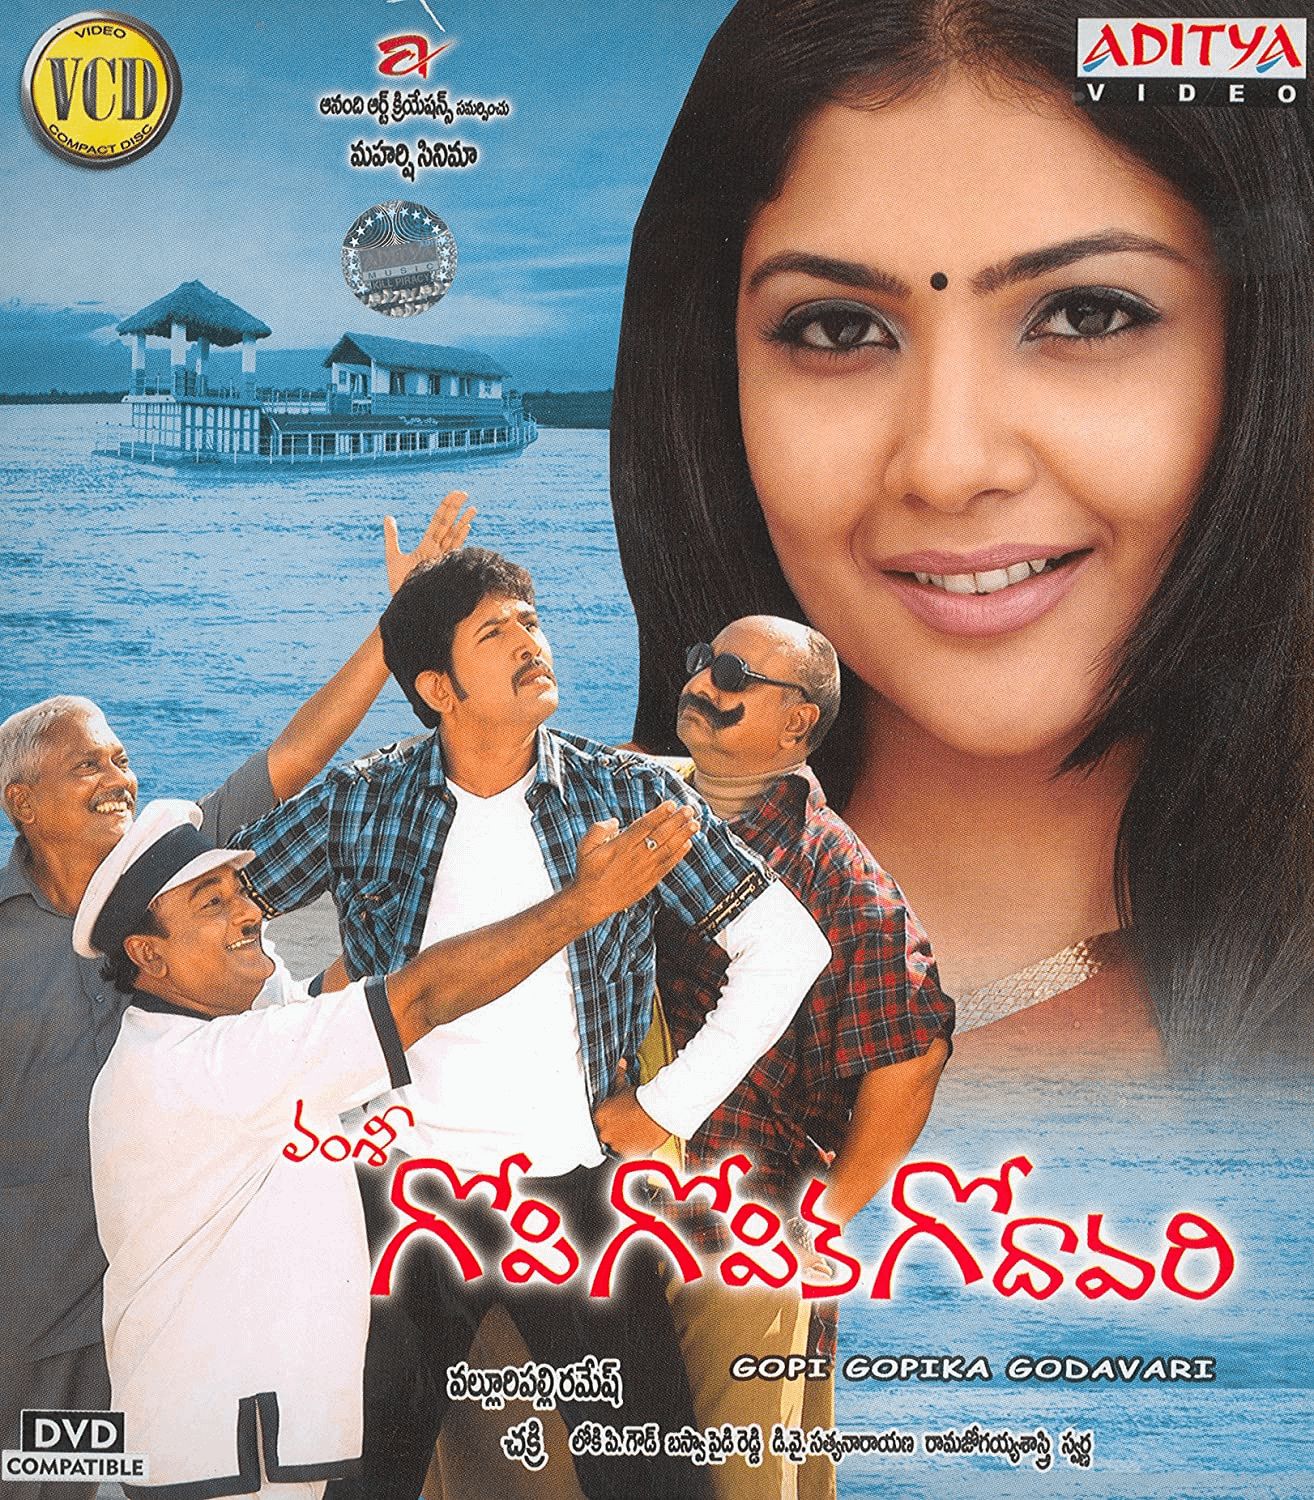 r/tollywood - Telugu Cinema Retro Series 2009